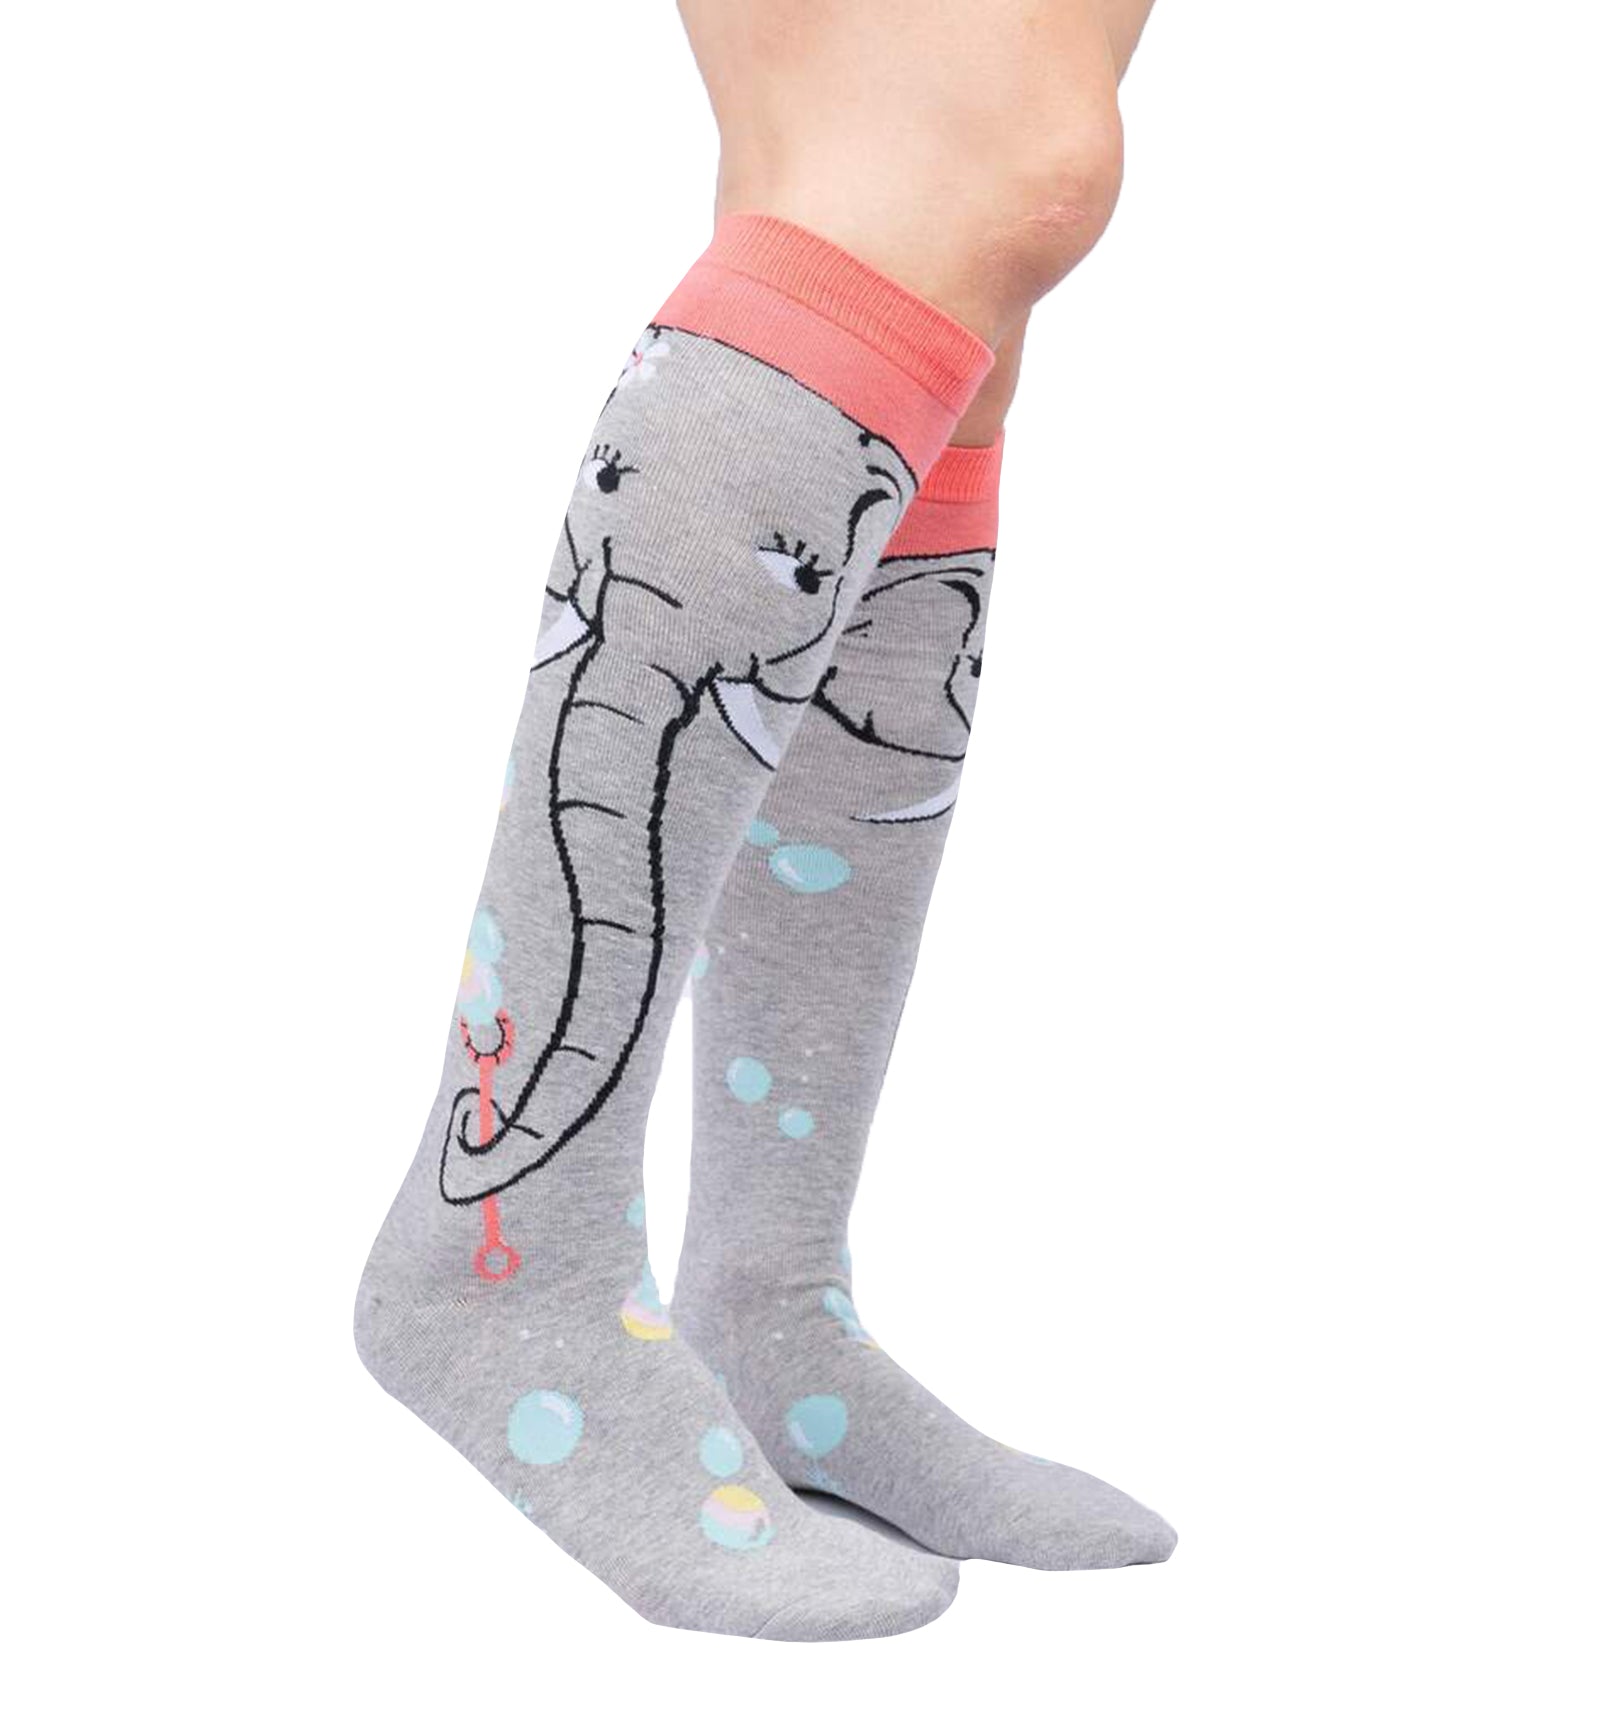 SOCK it to me Unisex Knee High Socks (F0622),Elephantastic! - Elephantastic!,One Size